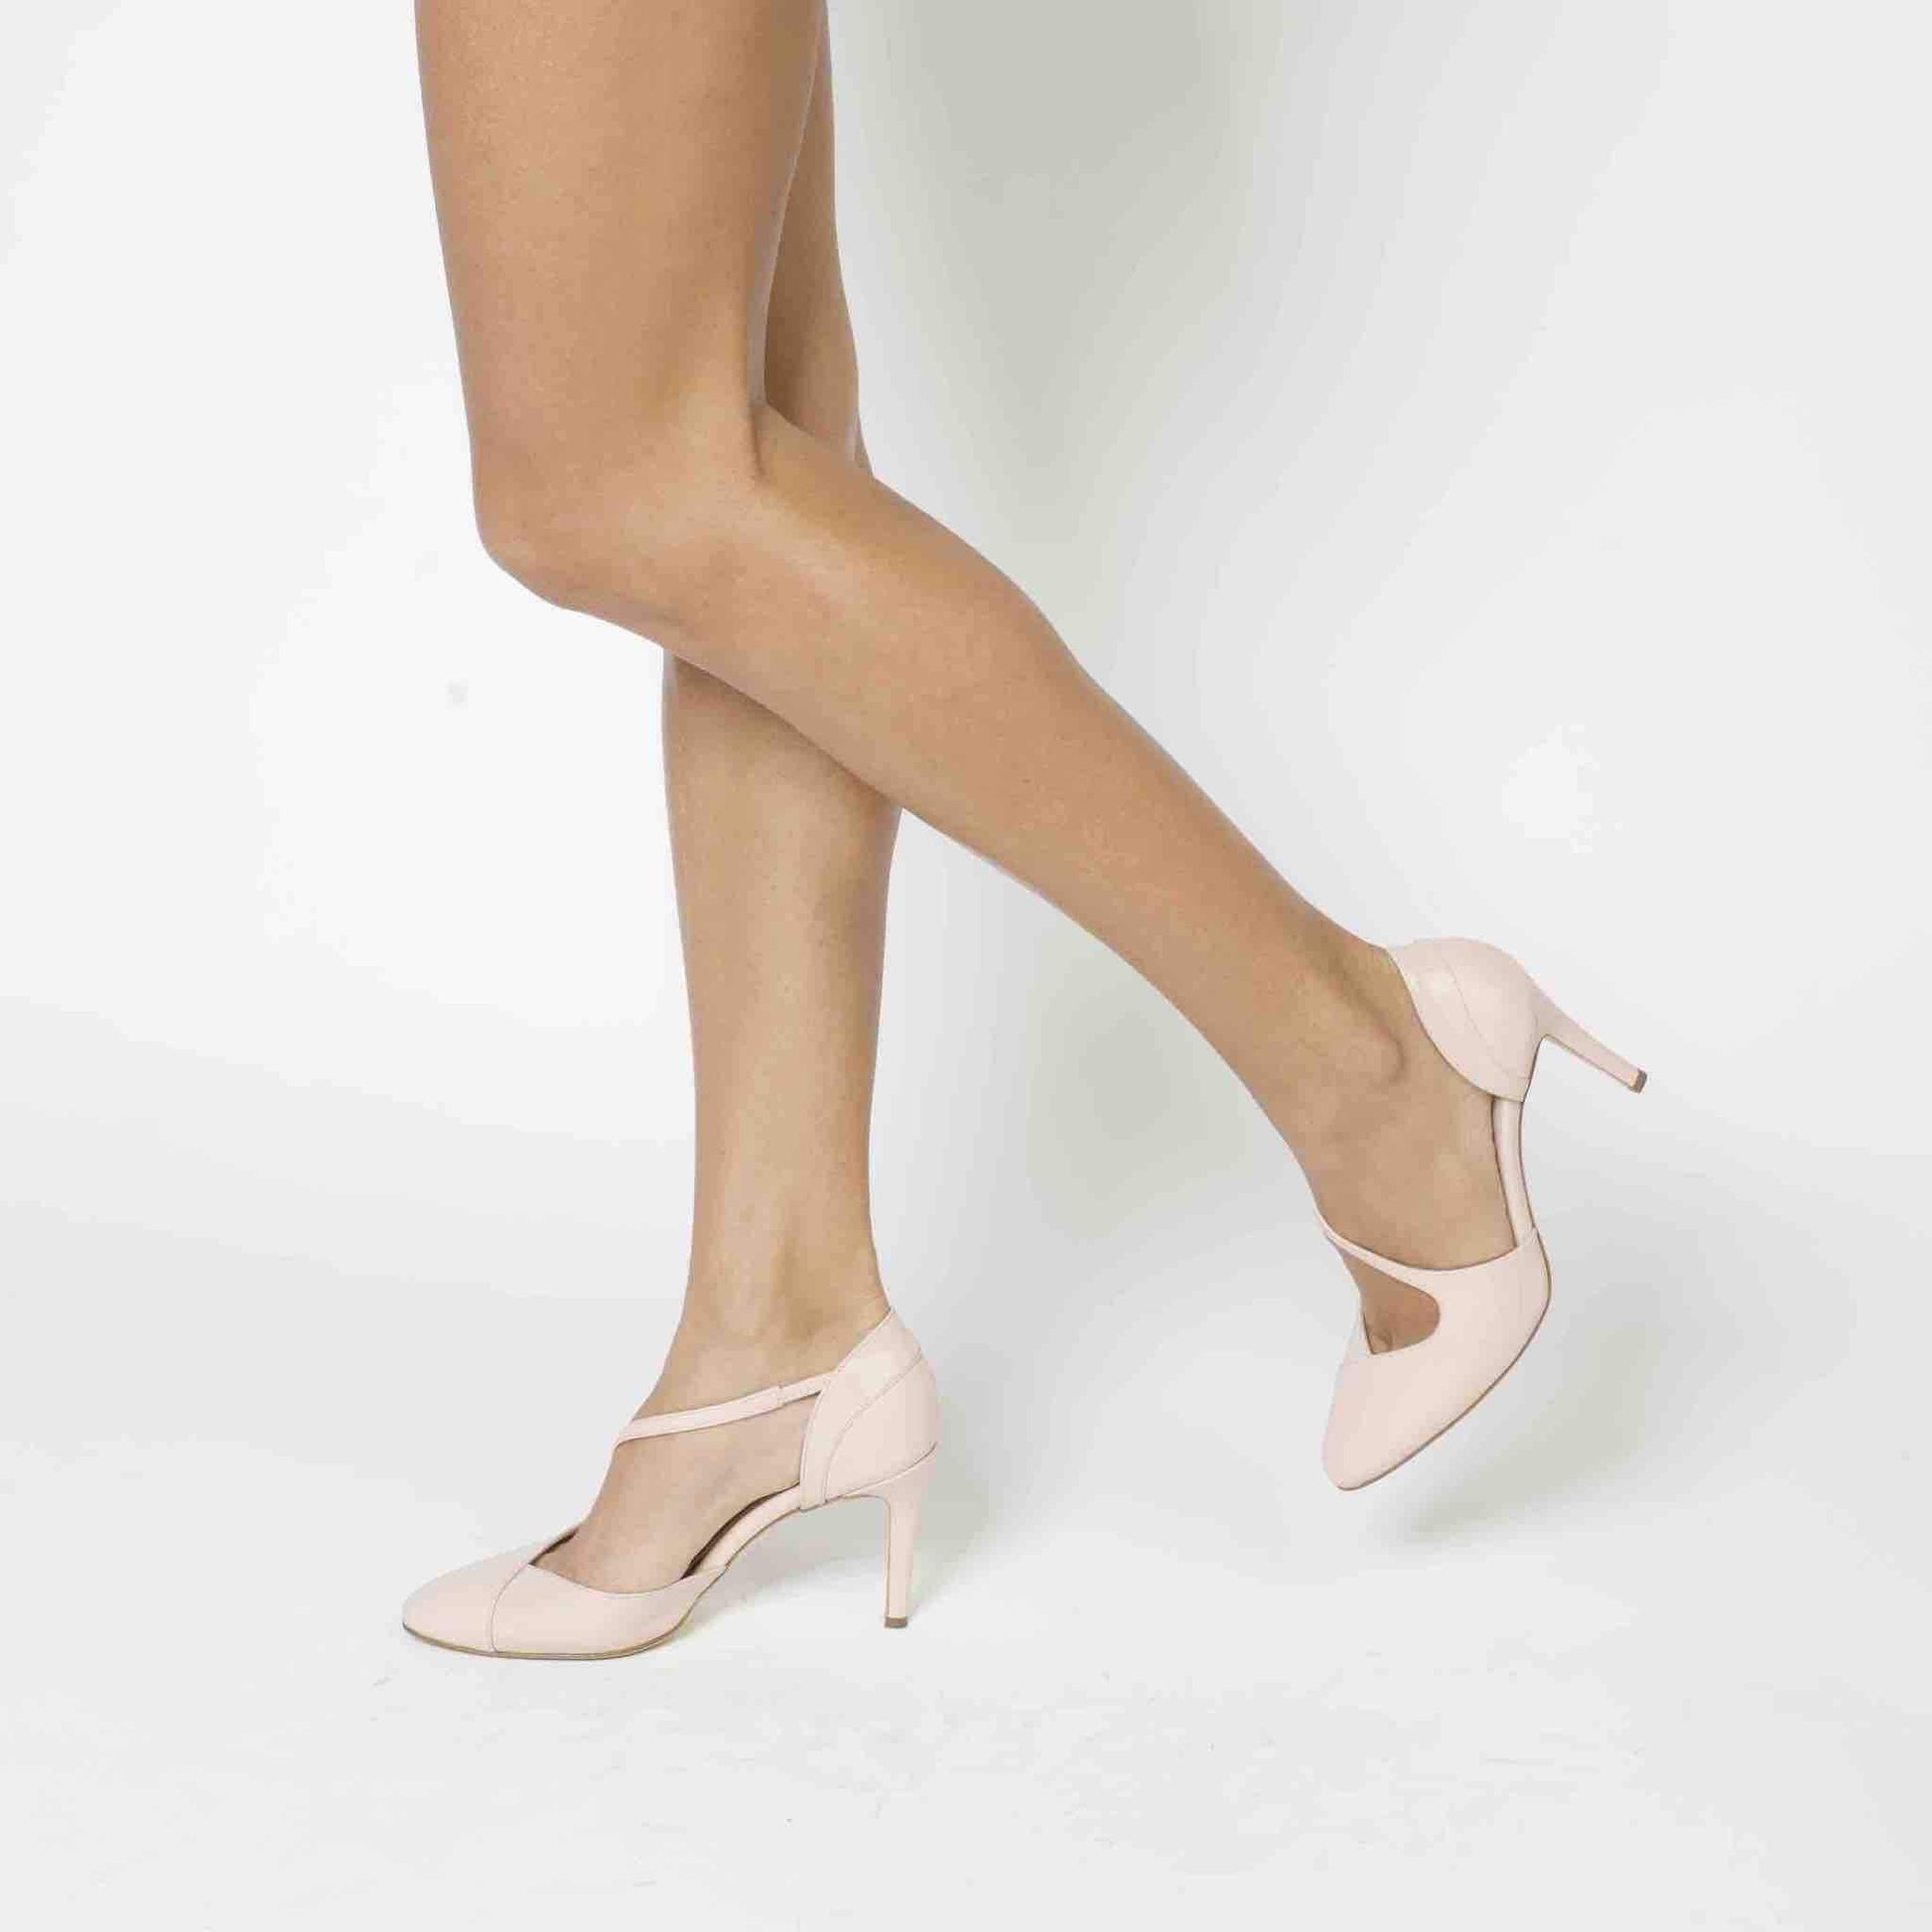 Elizée Shoes | The Elba Pump - Blush Leather High Heels